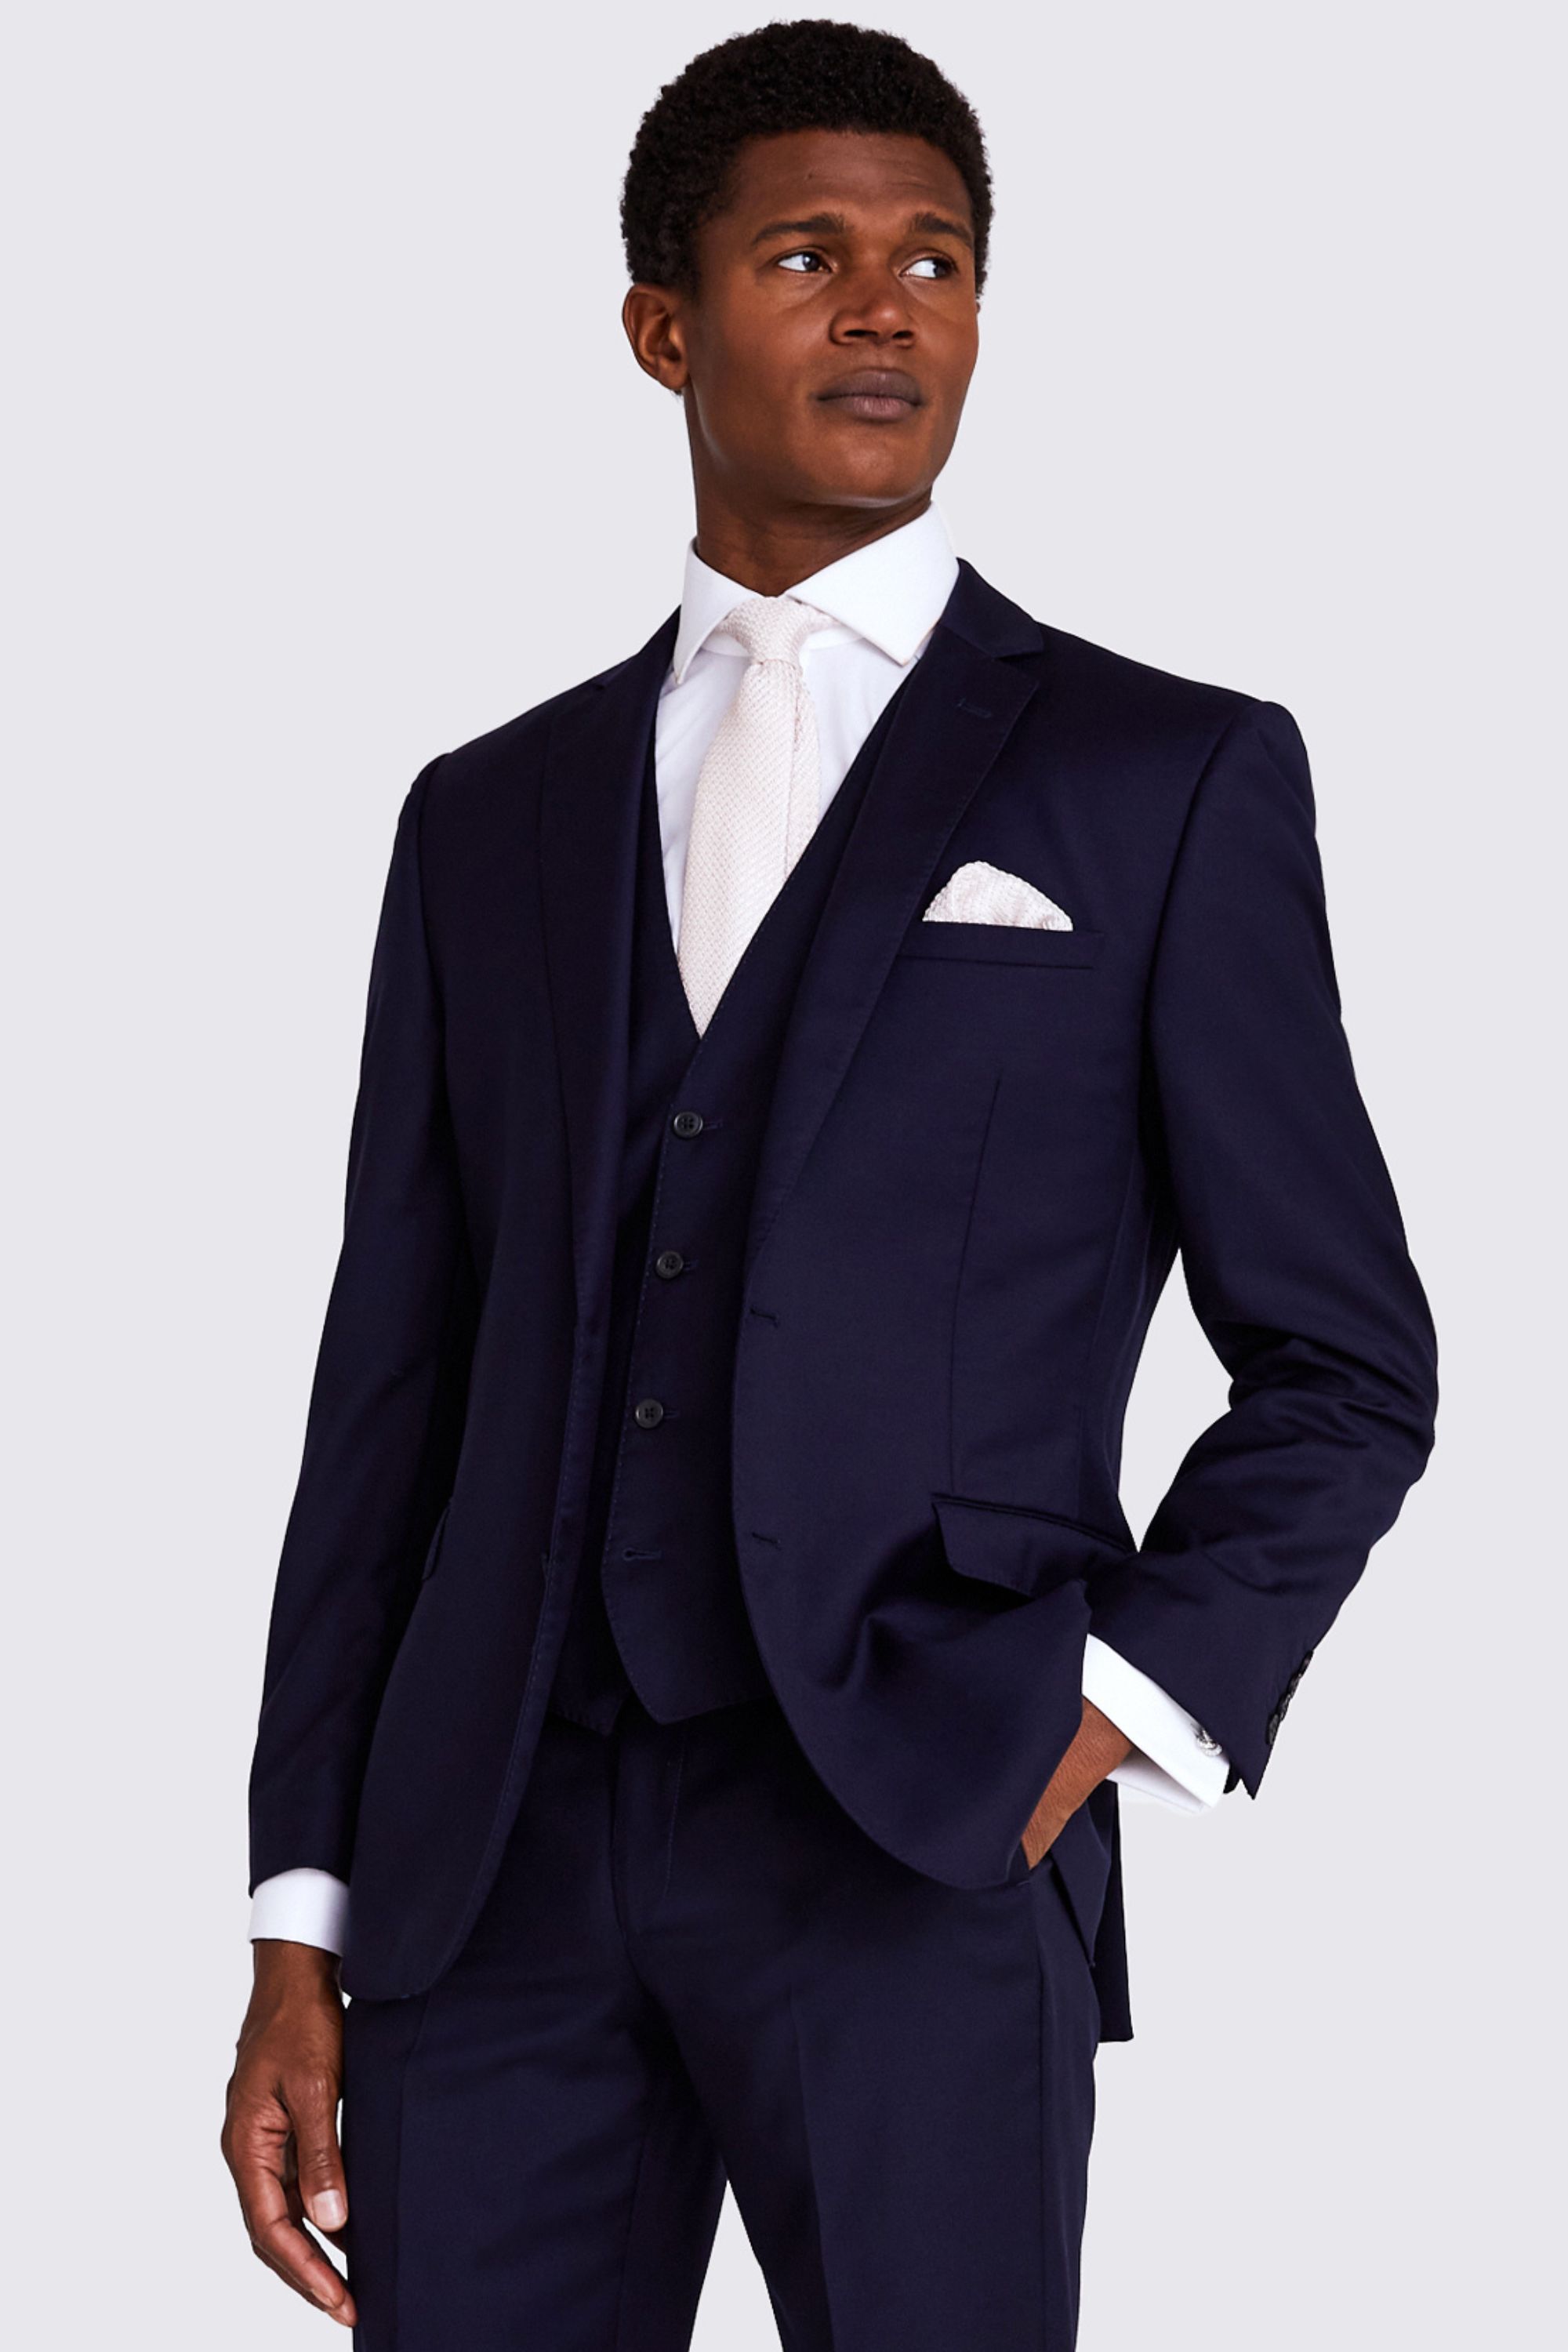 Lounge Suit Hire - Trevor West Formal Wear